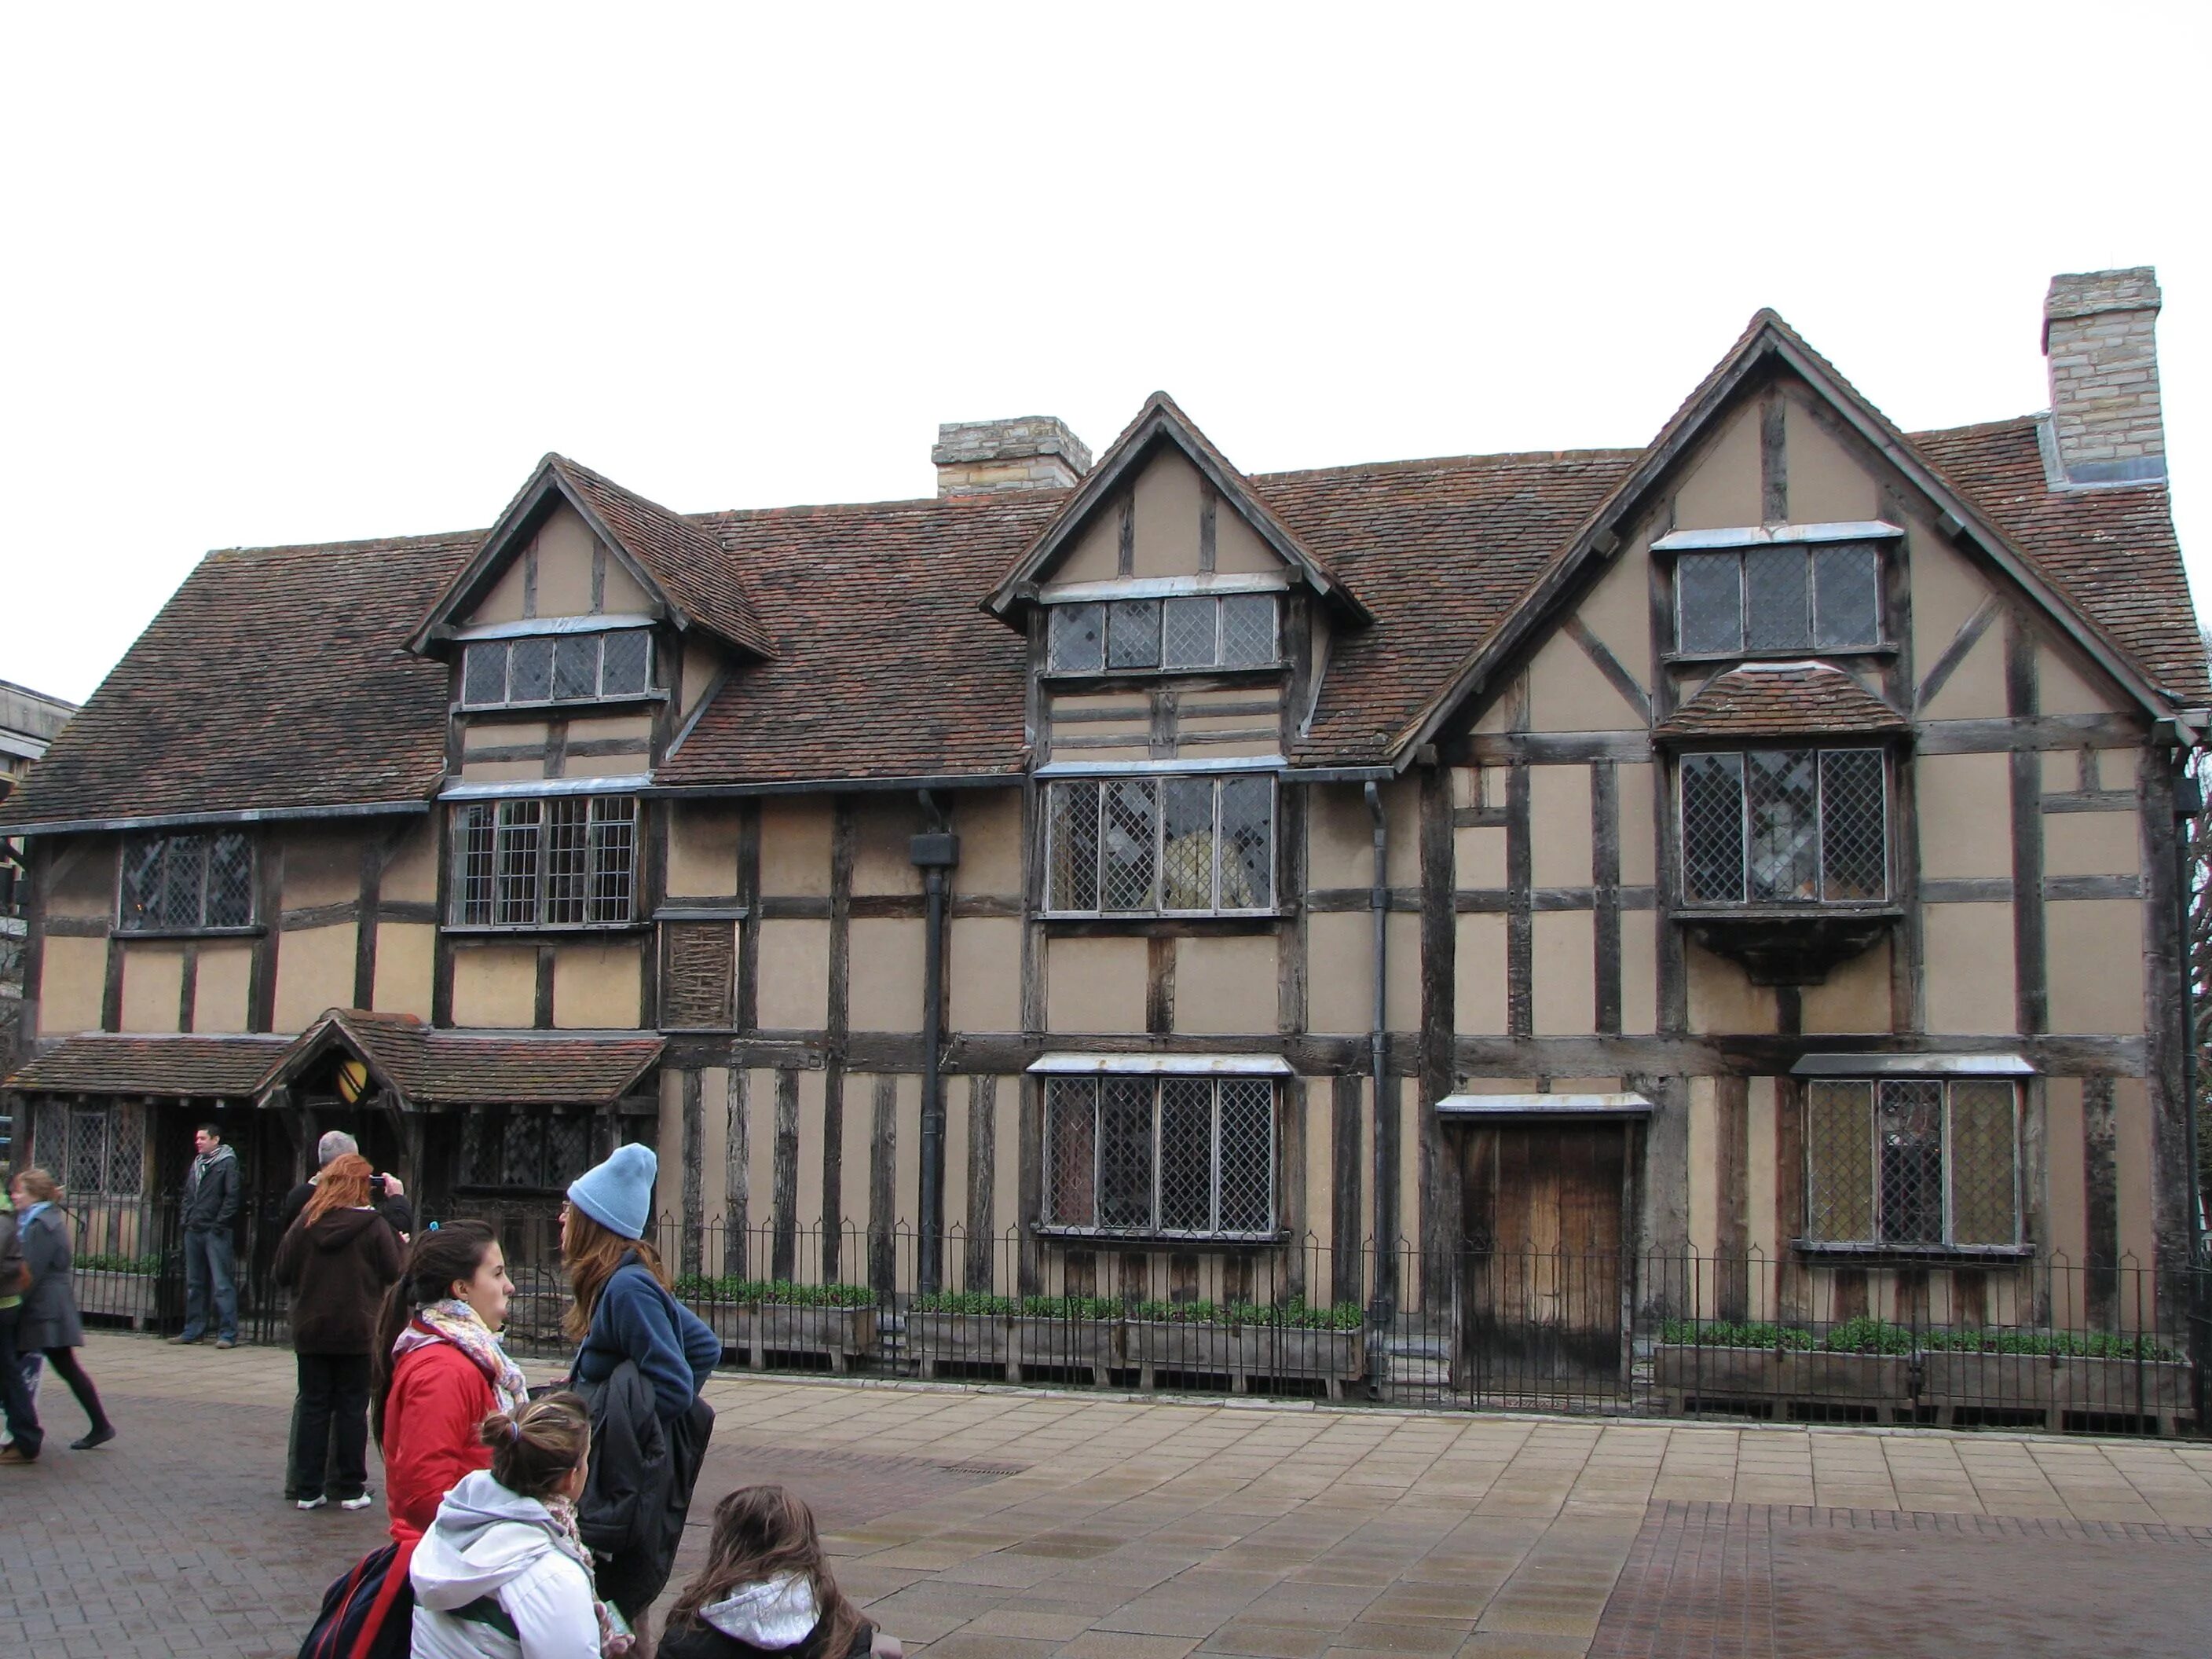 Stratford on avon. Стратфорд-апон-эйвон Шекспир. Музей Шекспира в Стратфорд-на-Эйвоне. Хенли стрит дом рождения Шекспира. Stratford upon Avon.